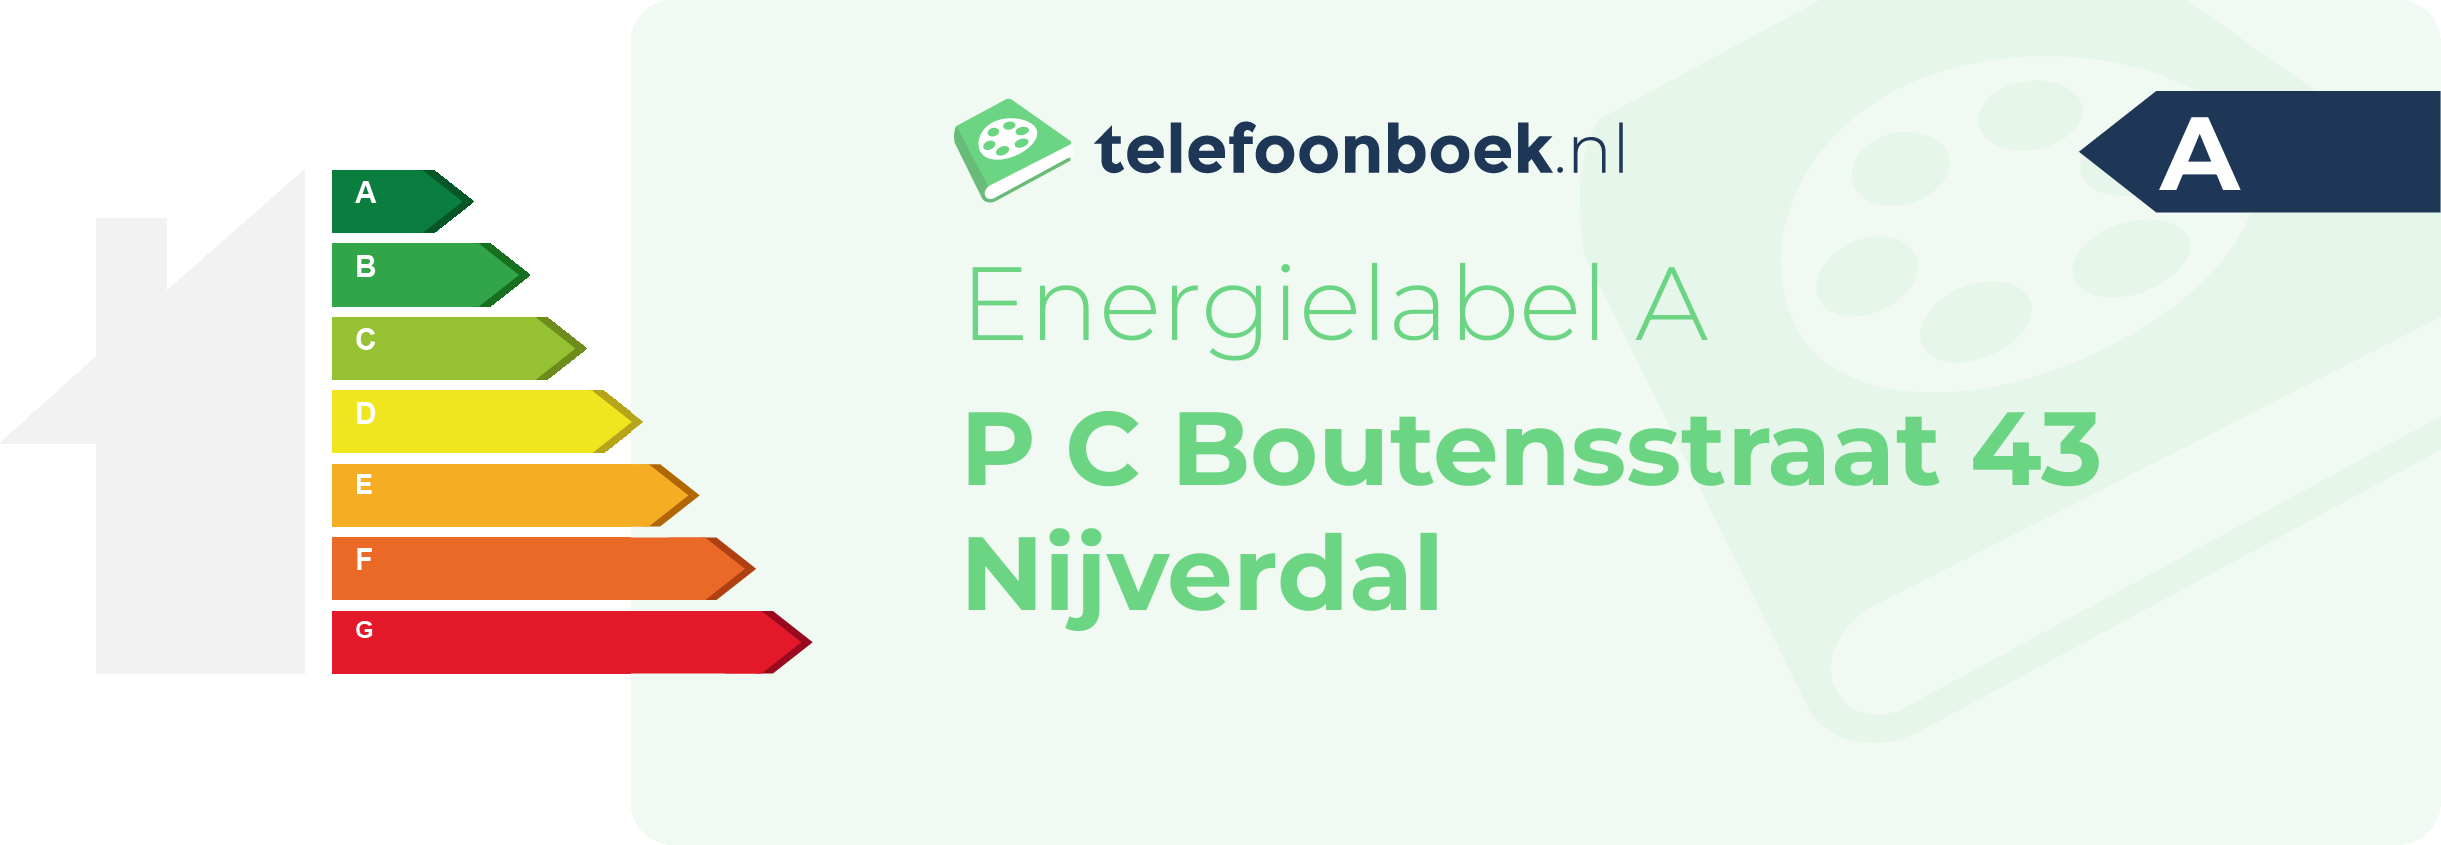 Energielabel P C Boutensstraat 43 Nijverdal